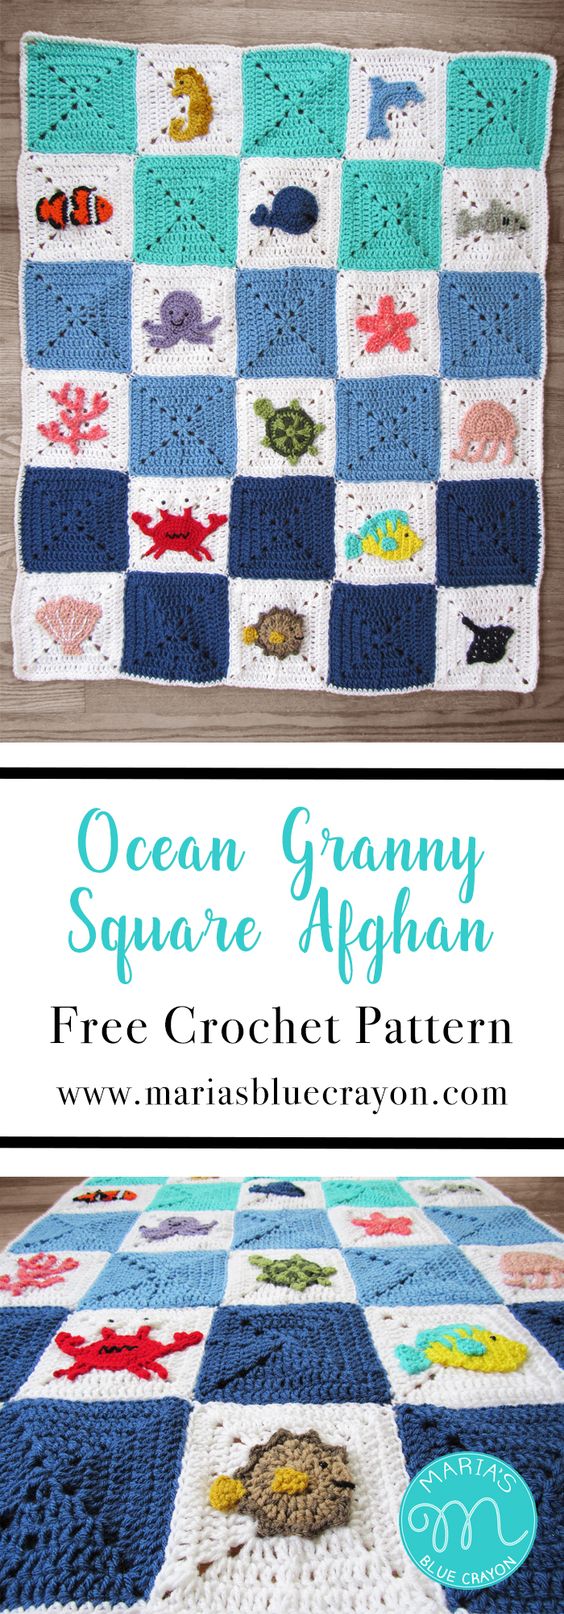 Ocean Granny Square Afghan free crochet pattern. 